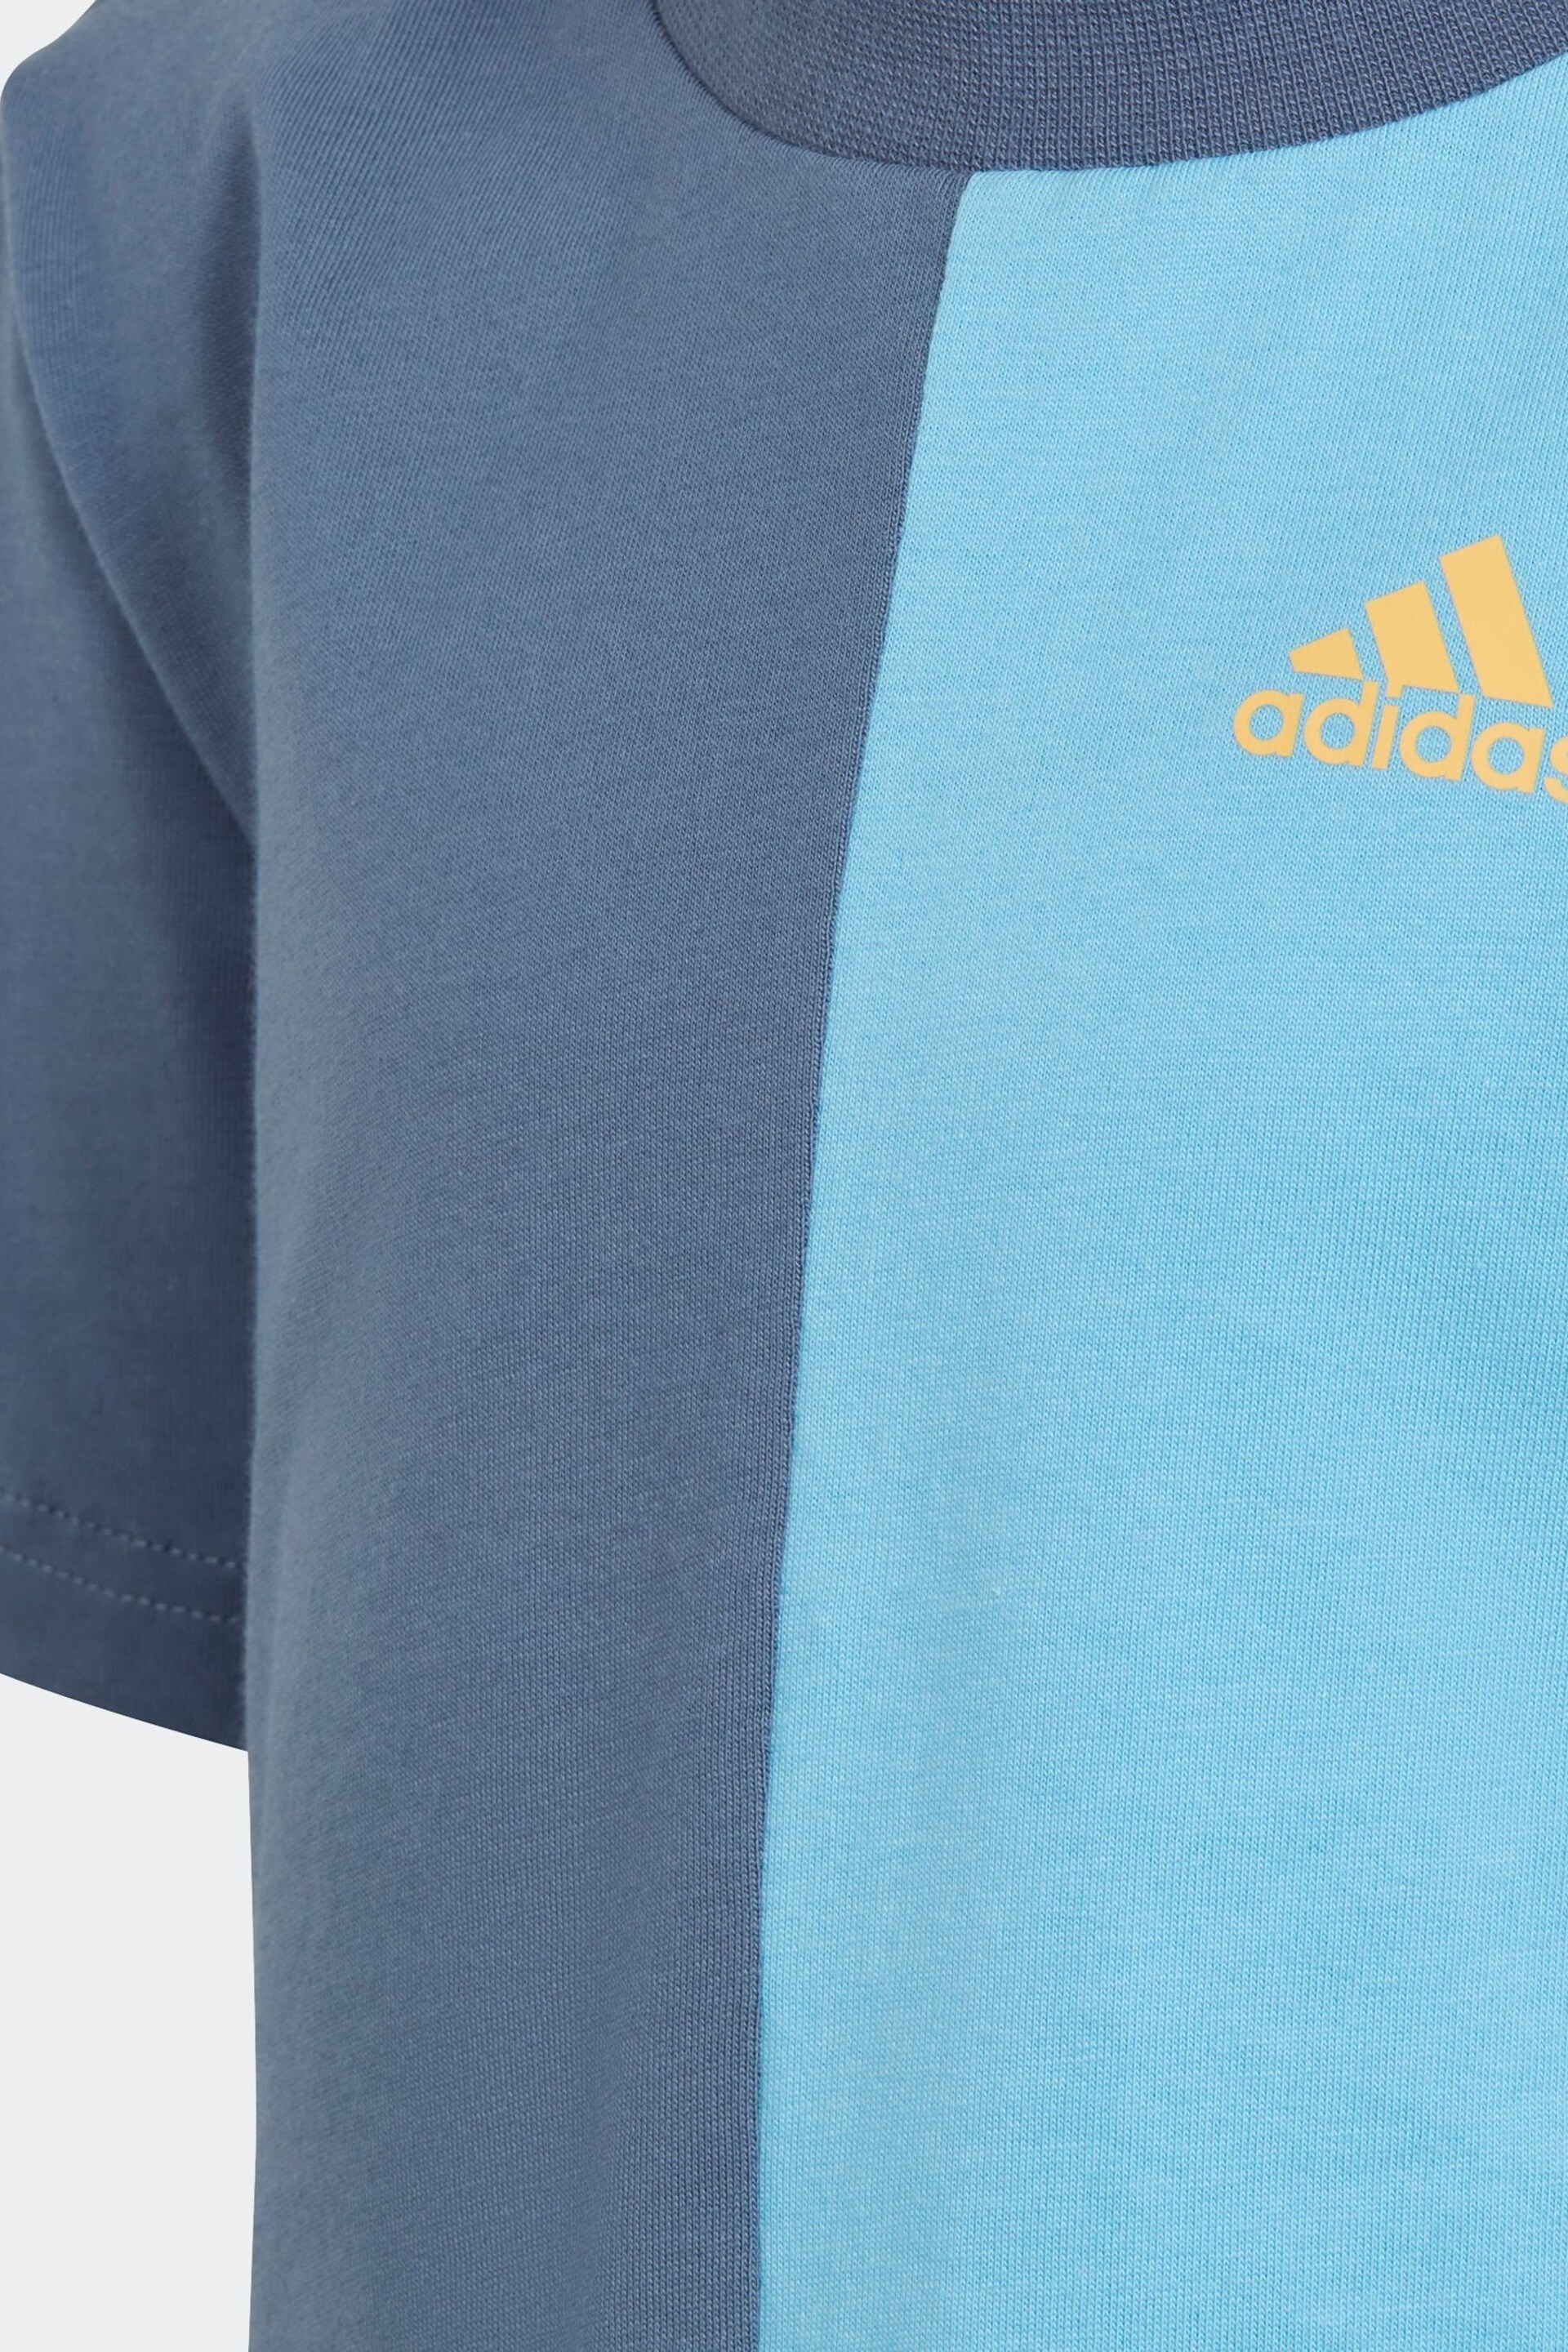 adidas Blue Sportswear T-Shirt and Shorts Set - Image 10 of 11